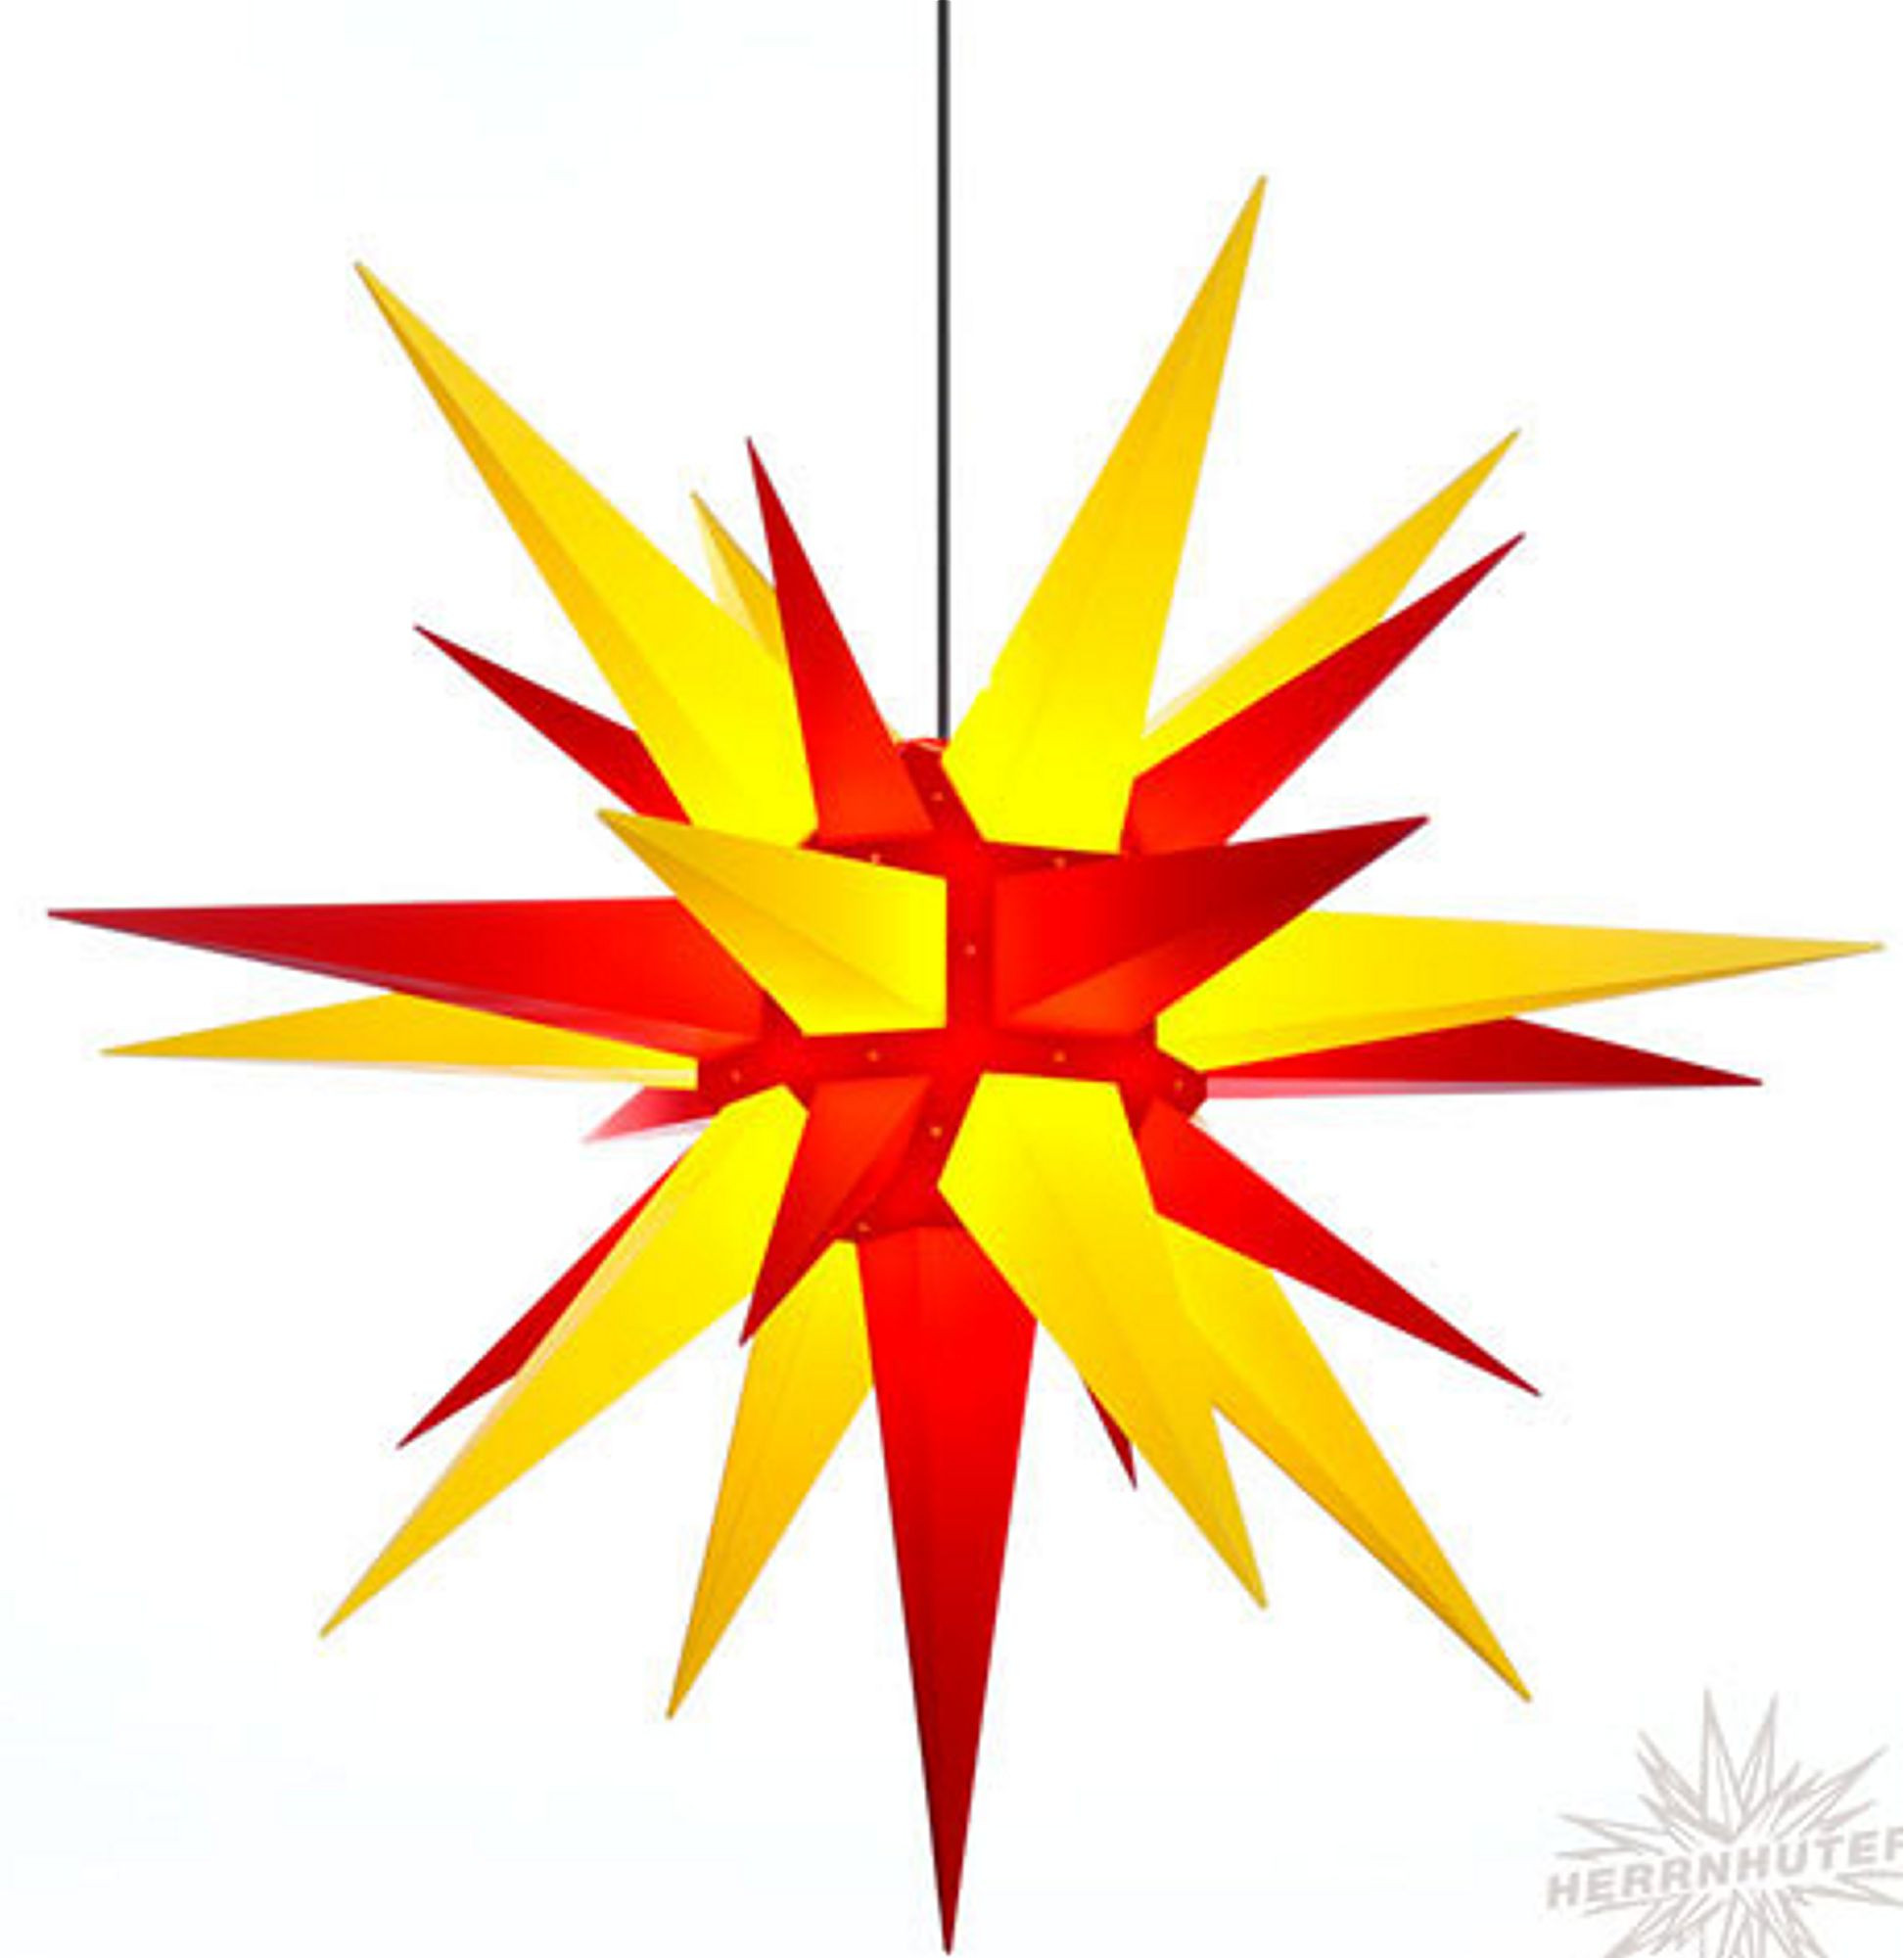 Großer Herrnhuter Stern A13 gelb/rot